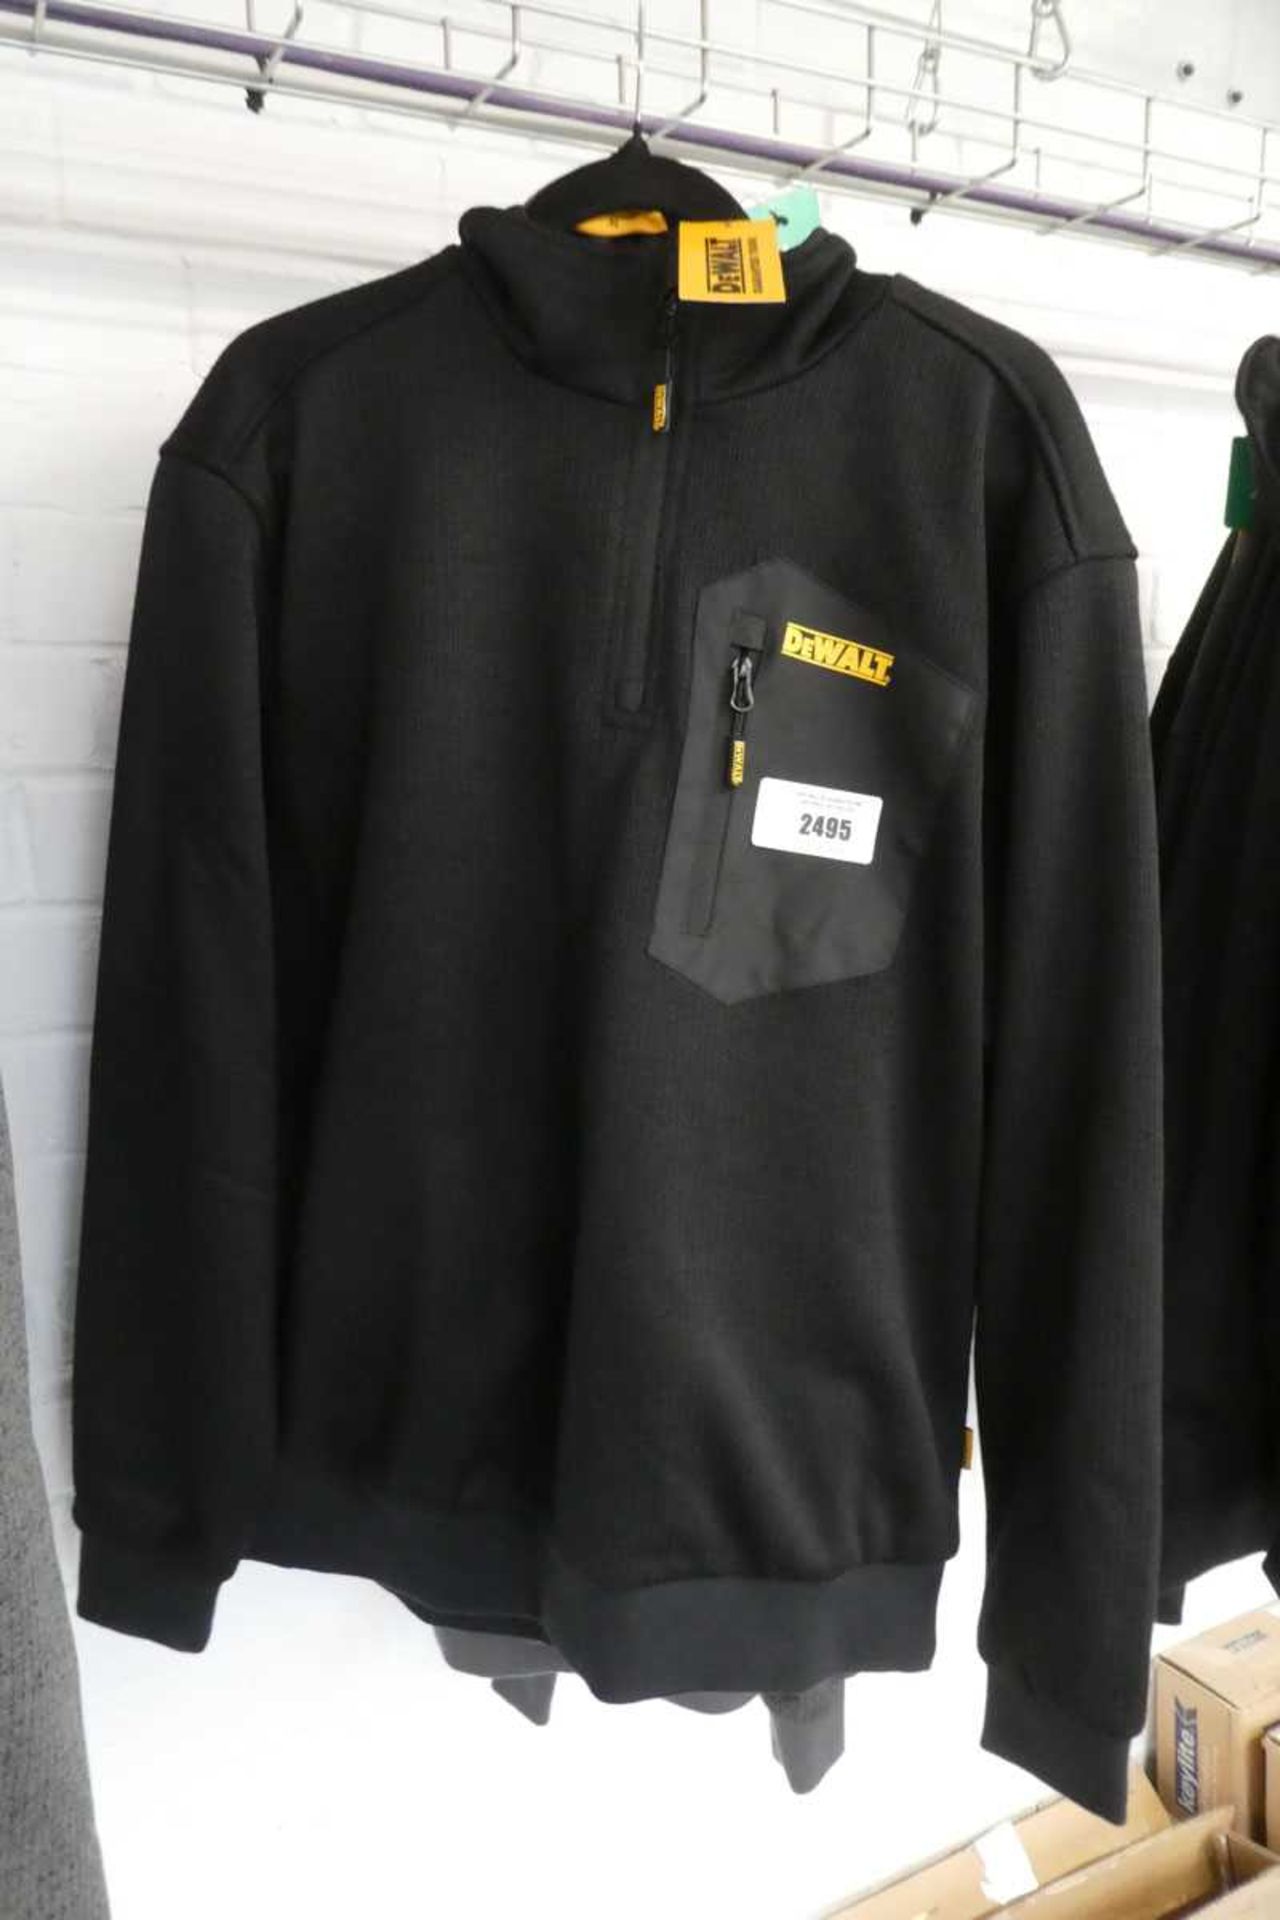 +VAT 2 DeWalt quarter neck zip up hoodies - 1 grey, 1 black, size XL